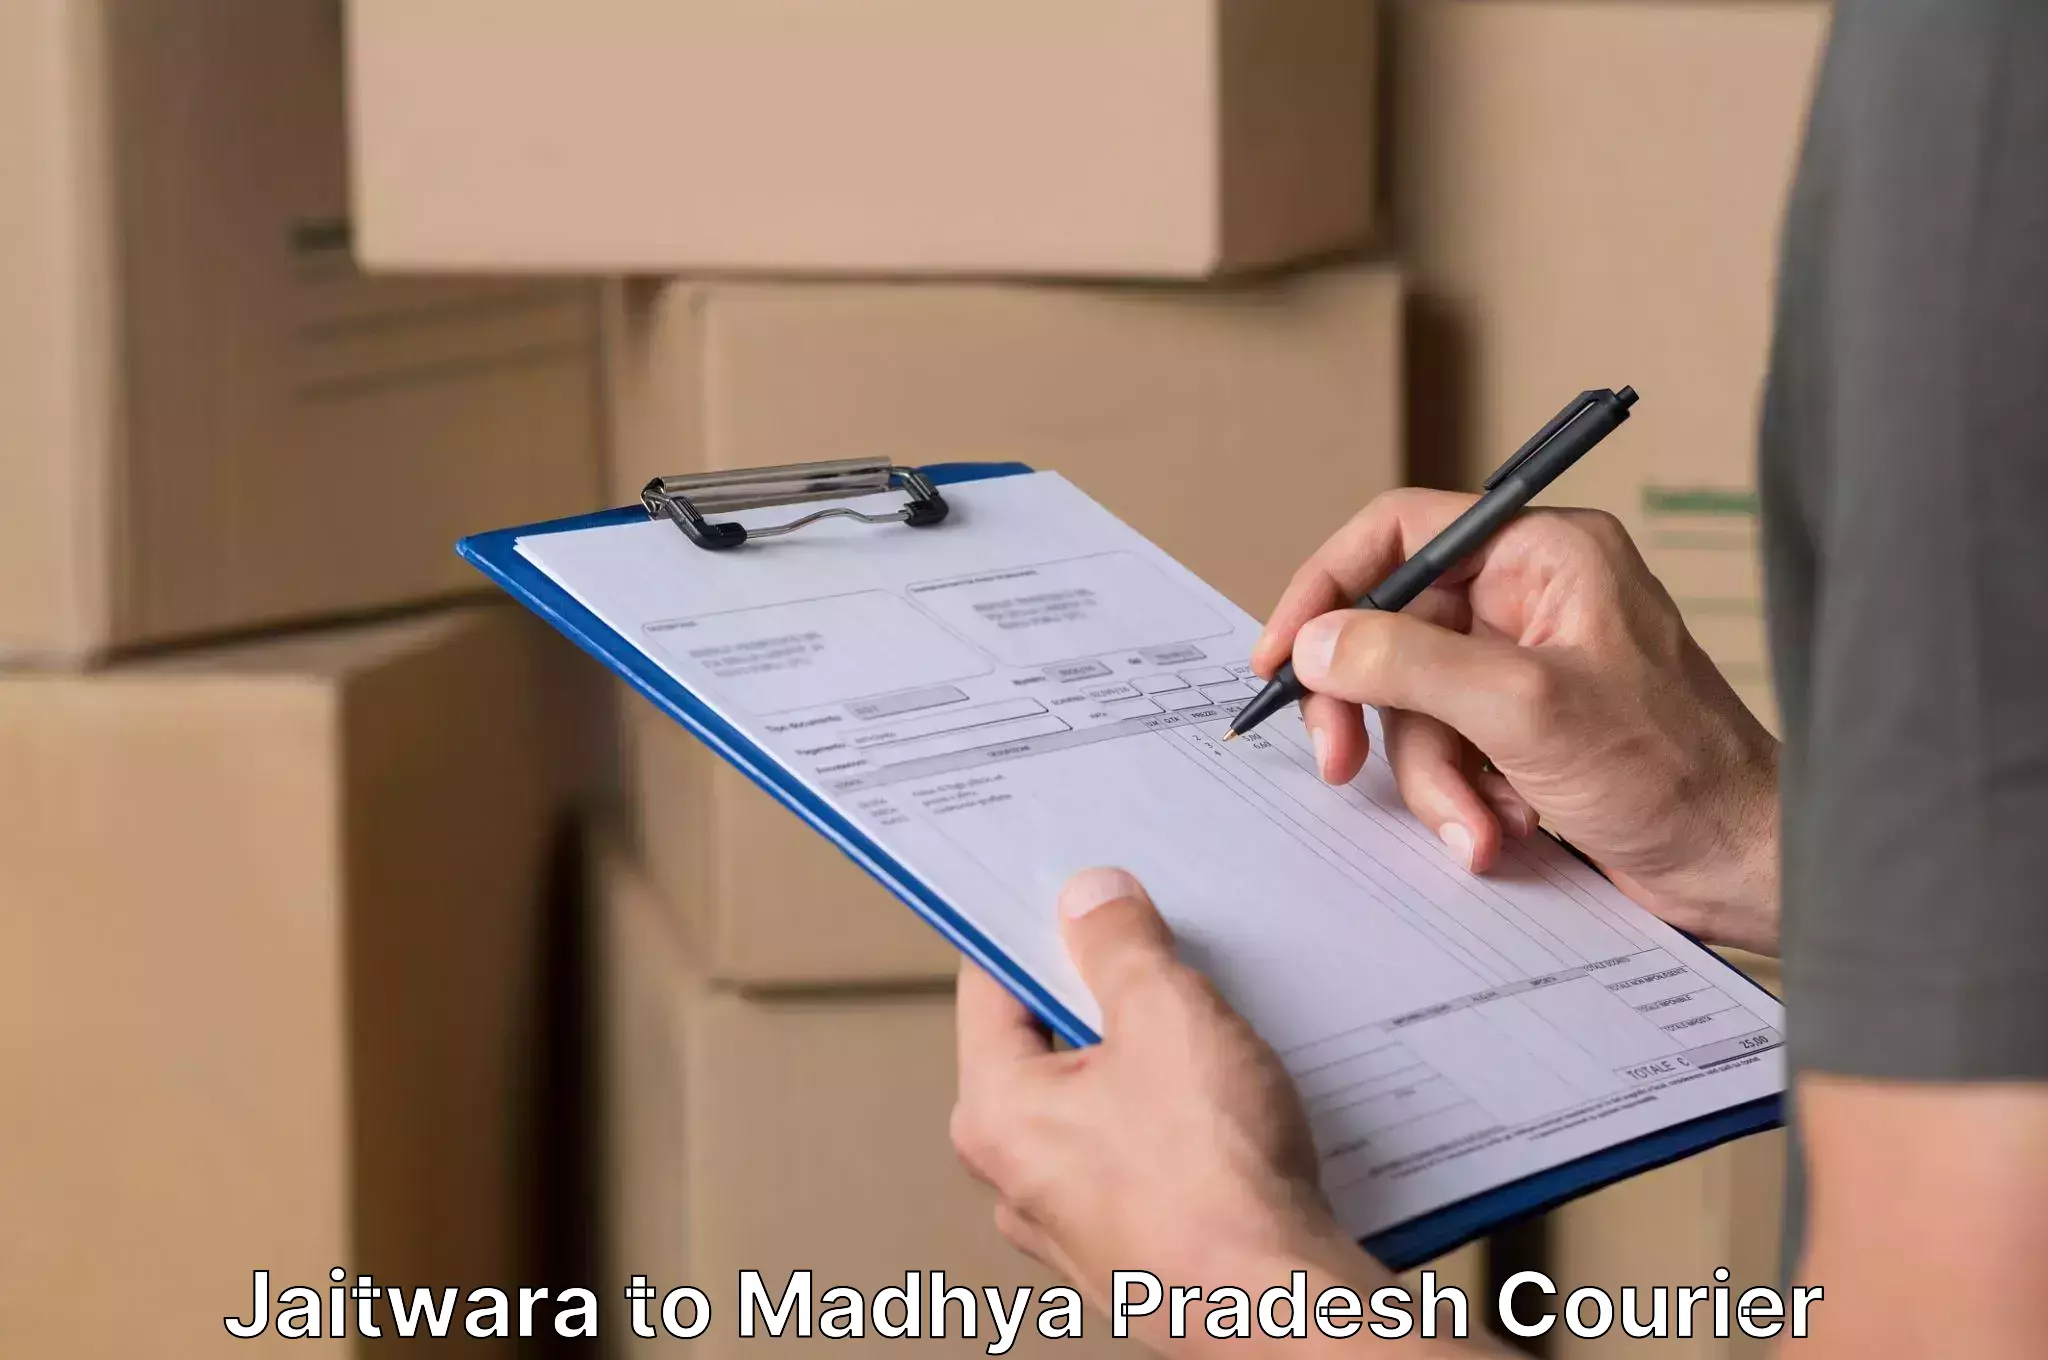 Professional movers and packers Jaitwara to Vidisha